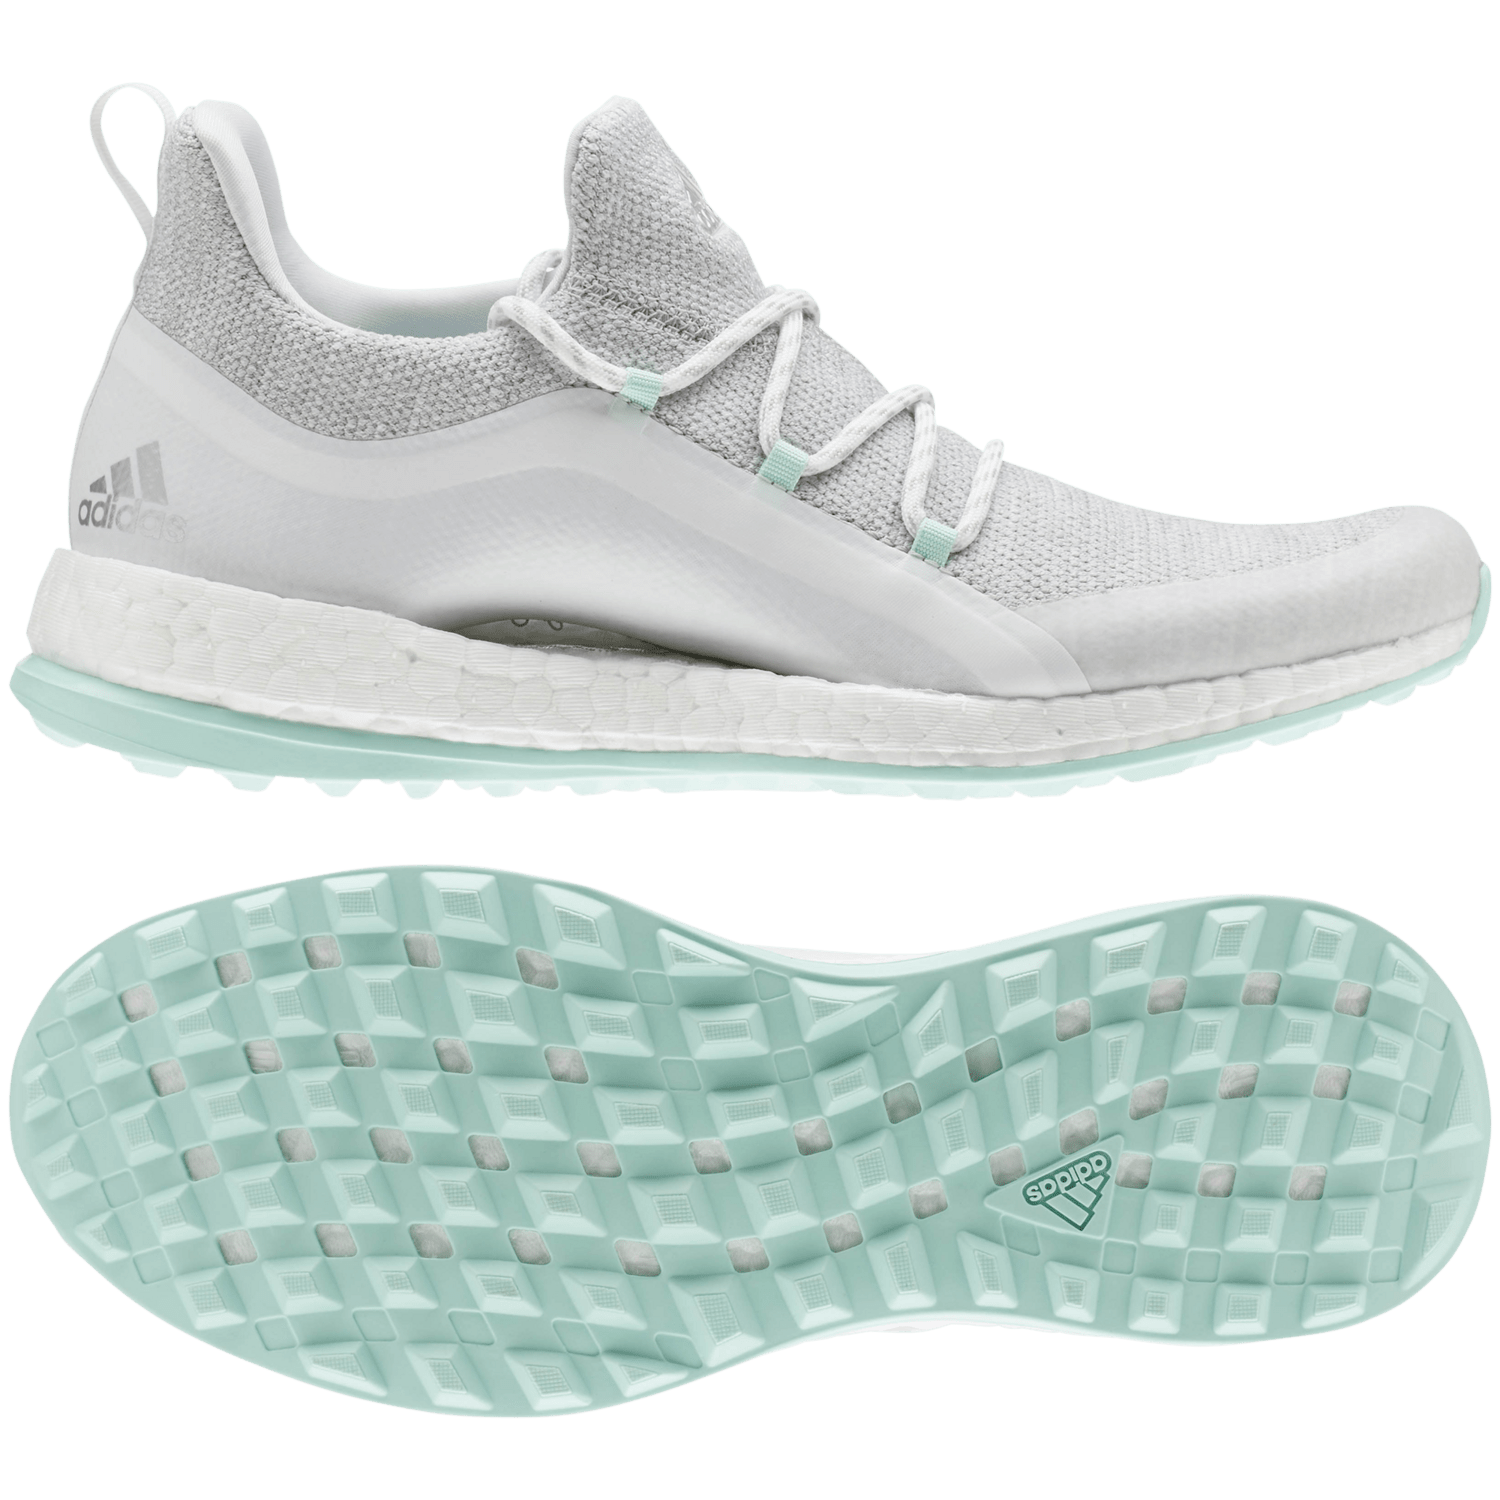 pureboost golf shoes